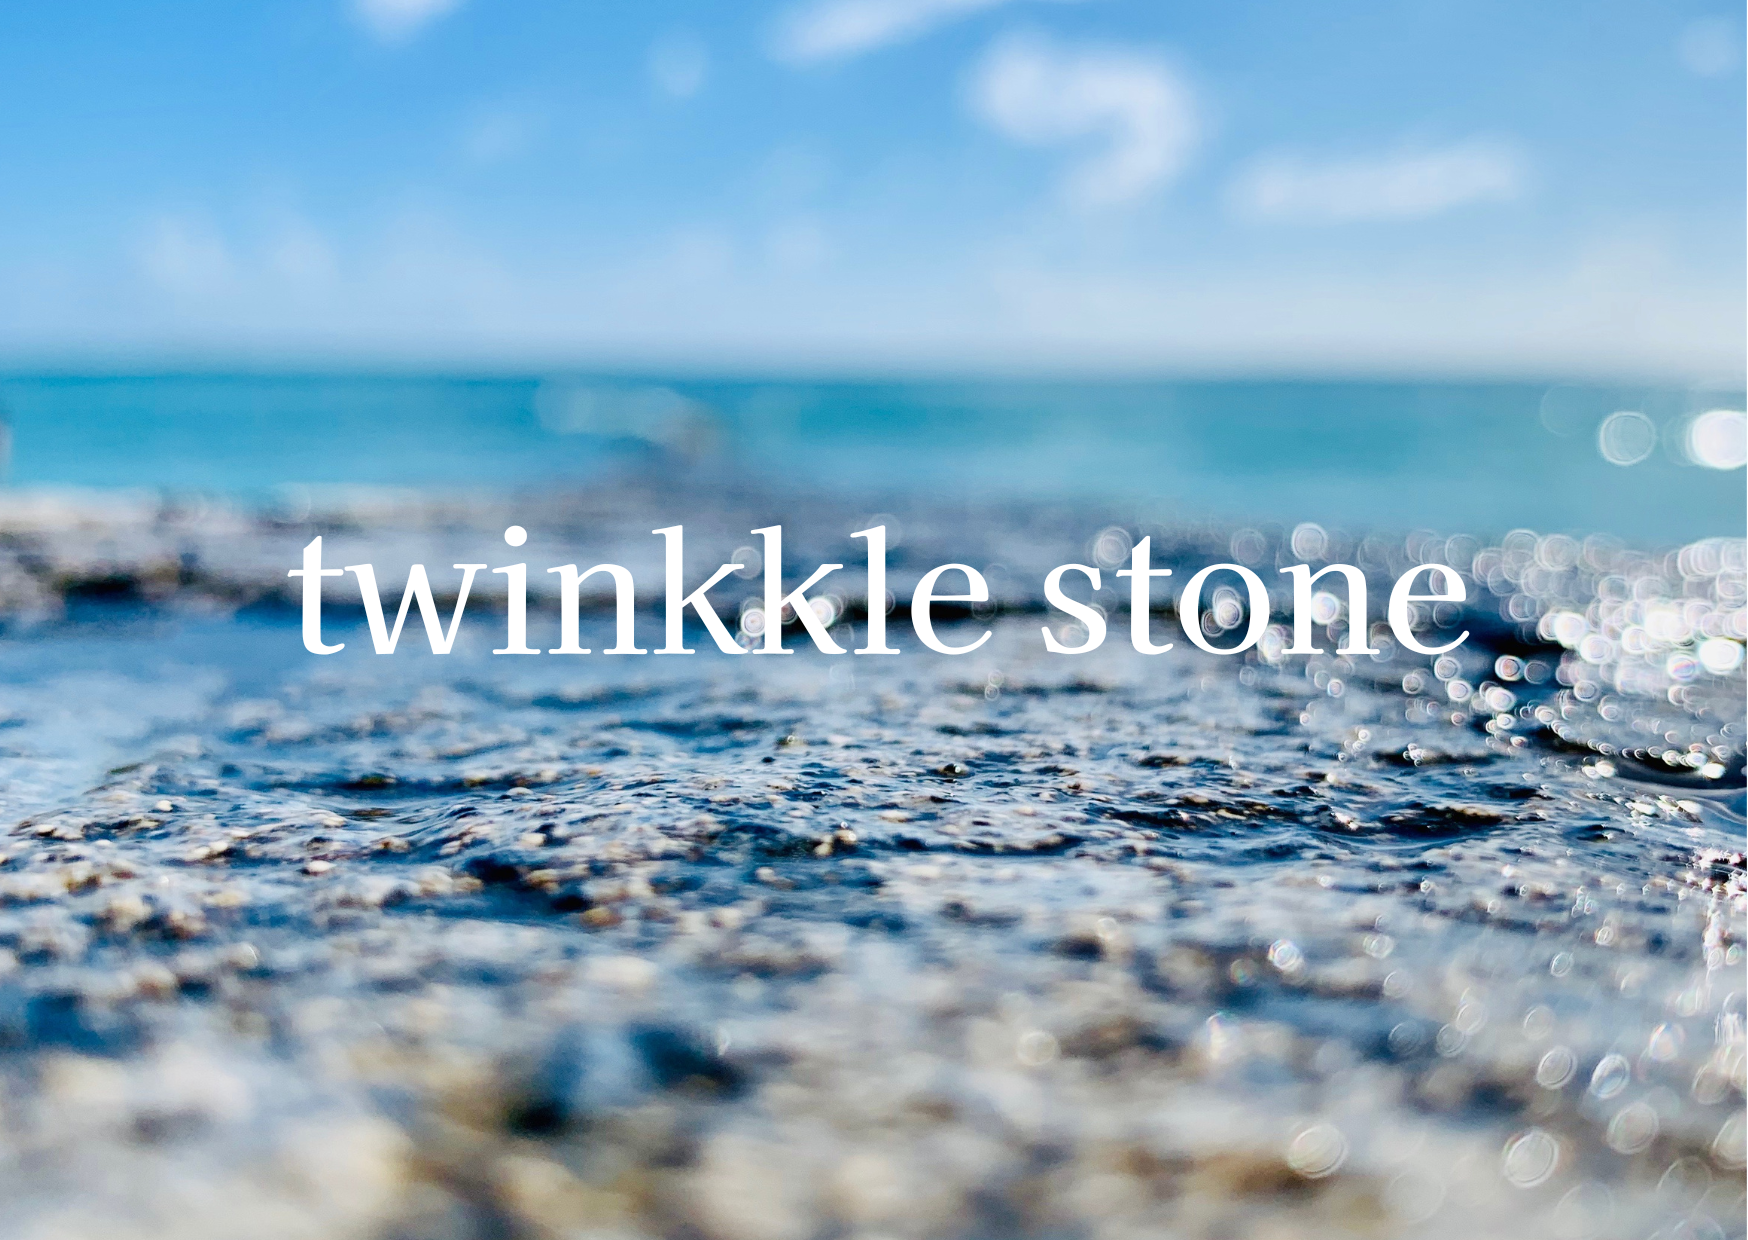 twinkkle stone             (ﾄｩｲﾝｸﾙｽﾄｰﾝ) 